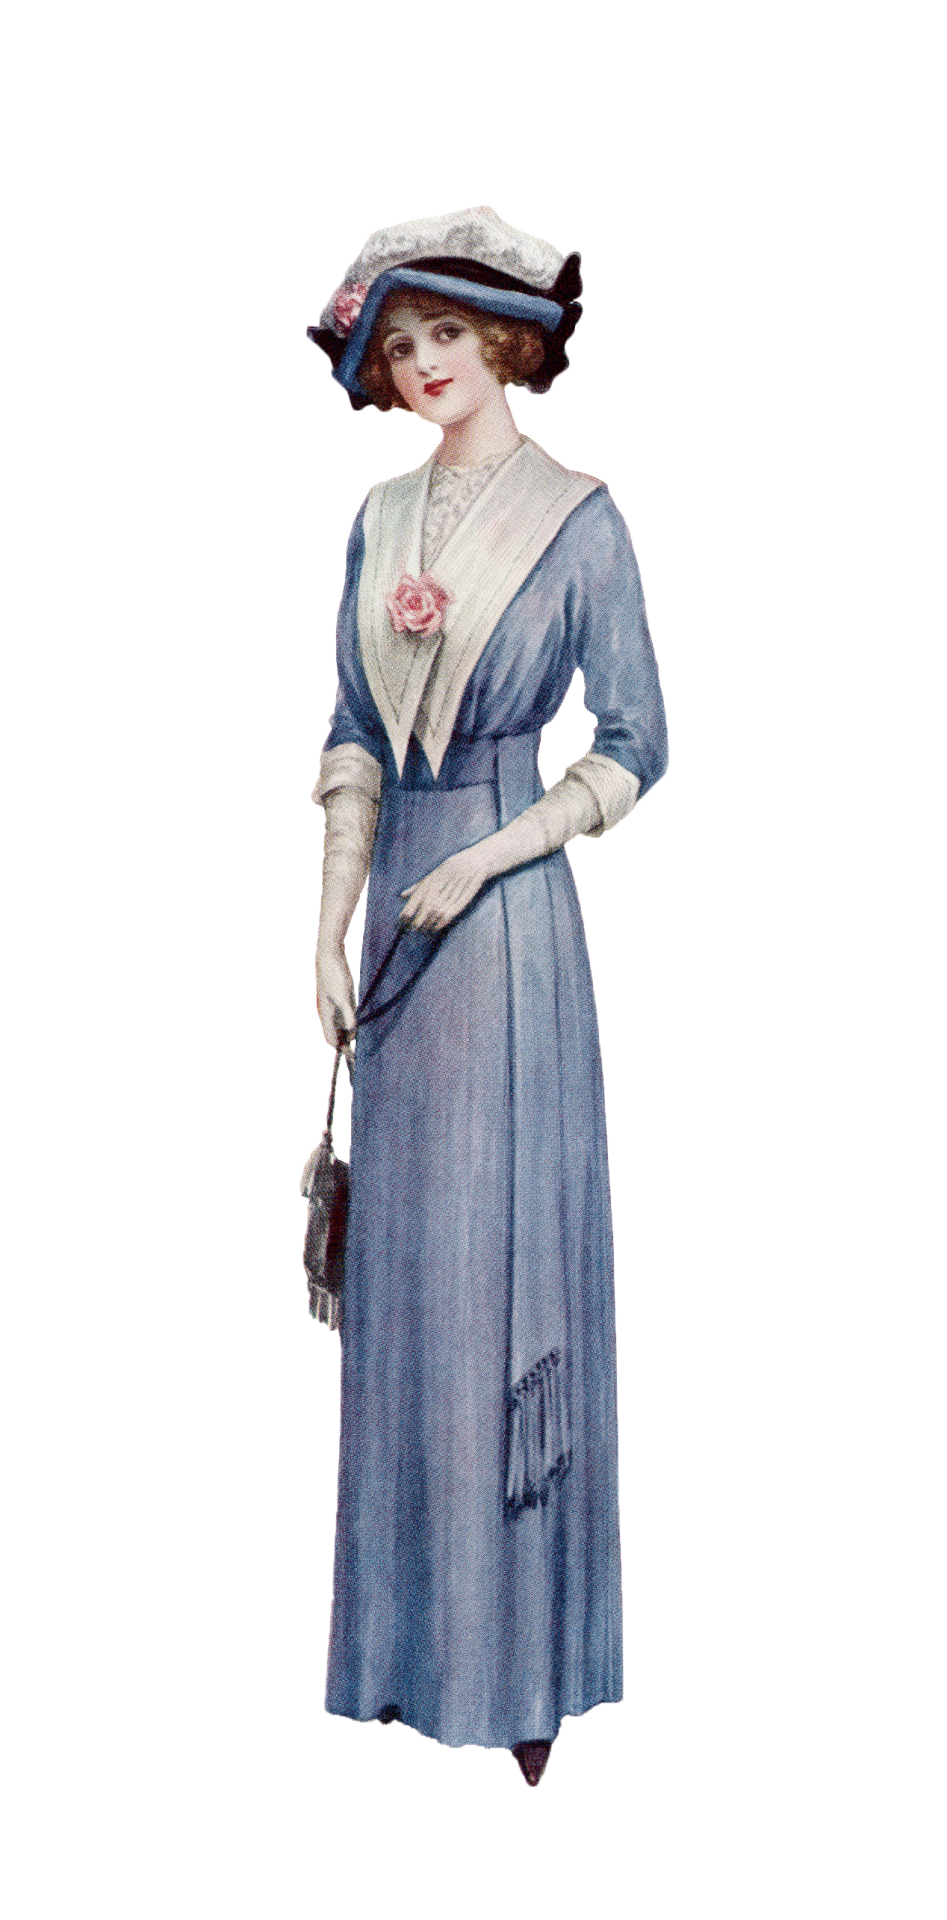 Victorian Woman Vintage Fashion